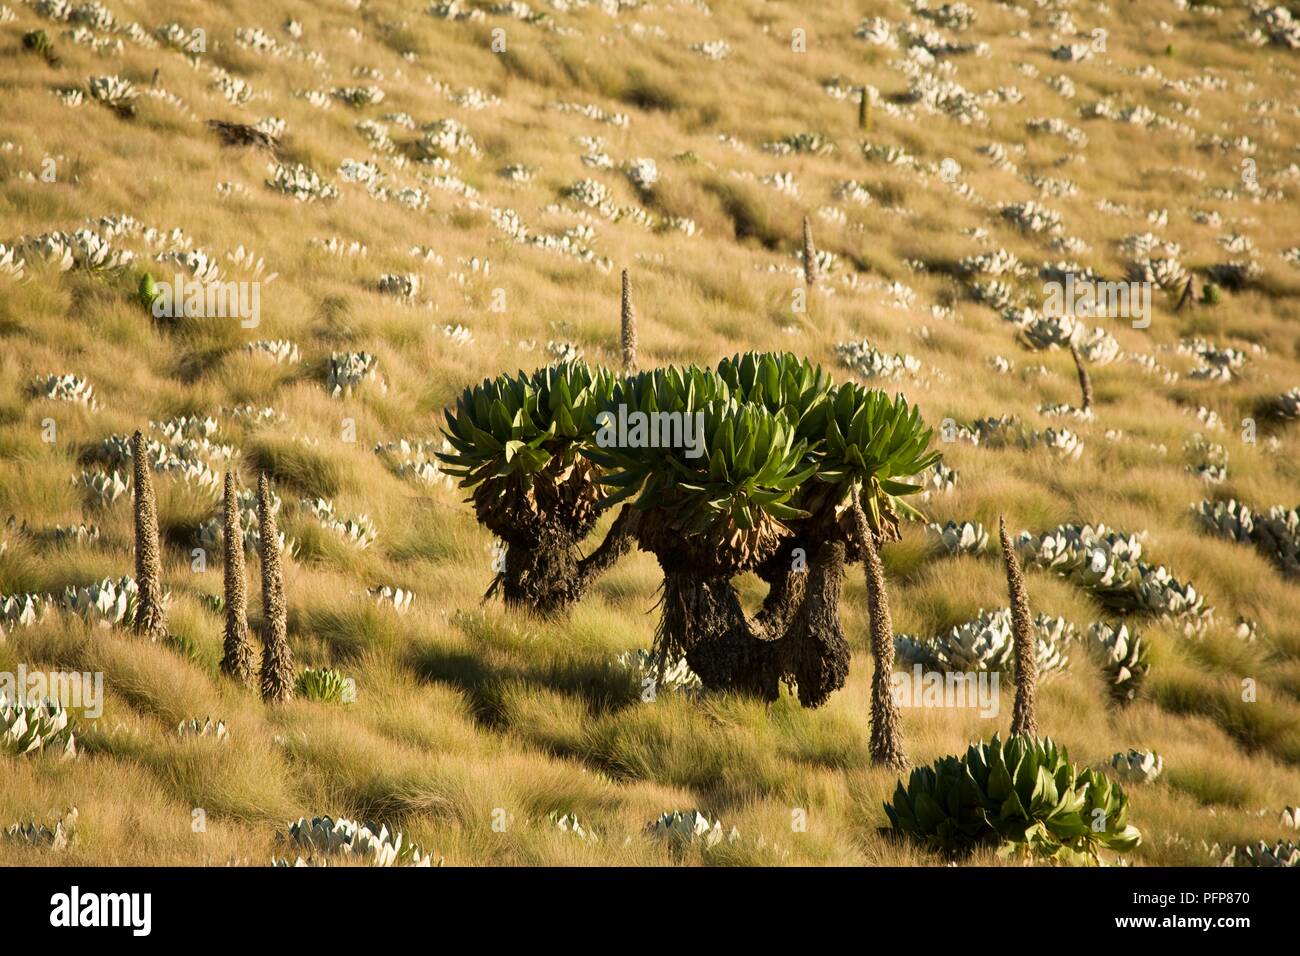 Kenya, Mount Kenya National Park, vegetation on grassy hillside, including Senecio sp. (Groundsel) and Lobelia sp. (Giant lobelia) Stock Photo